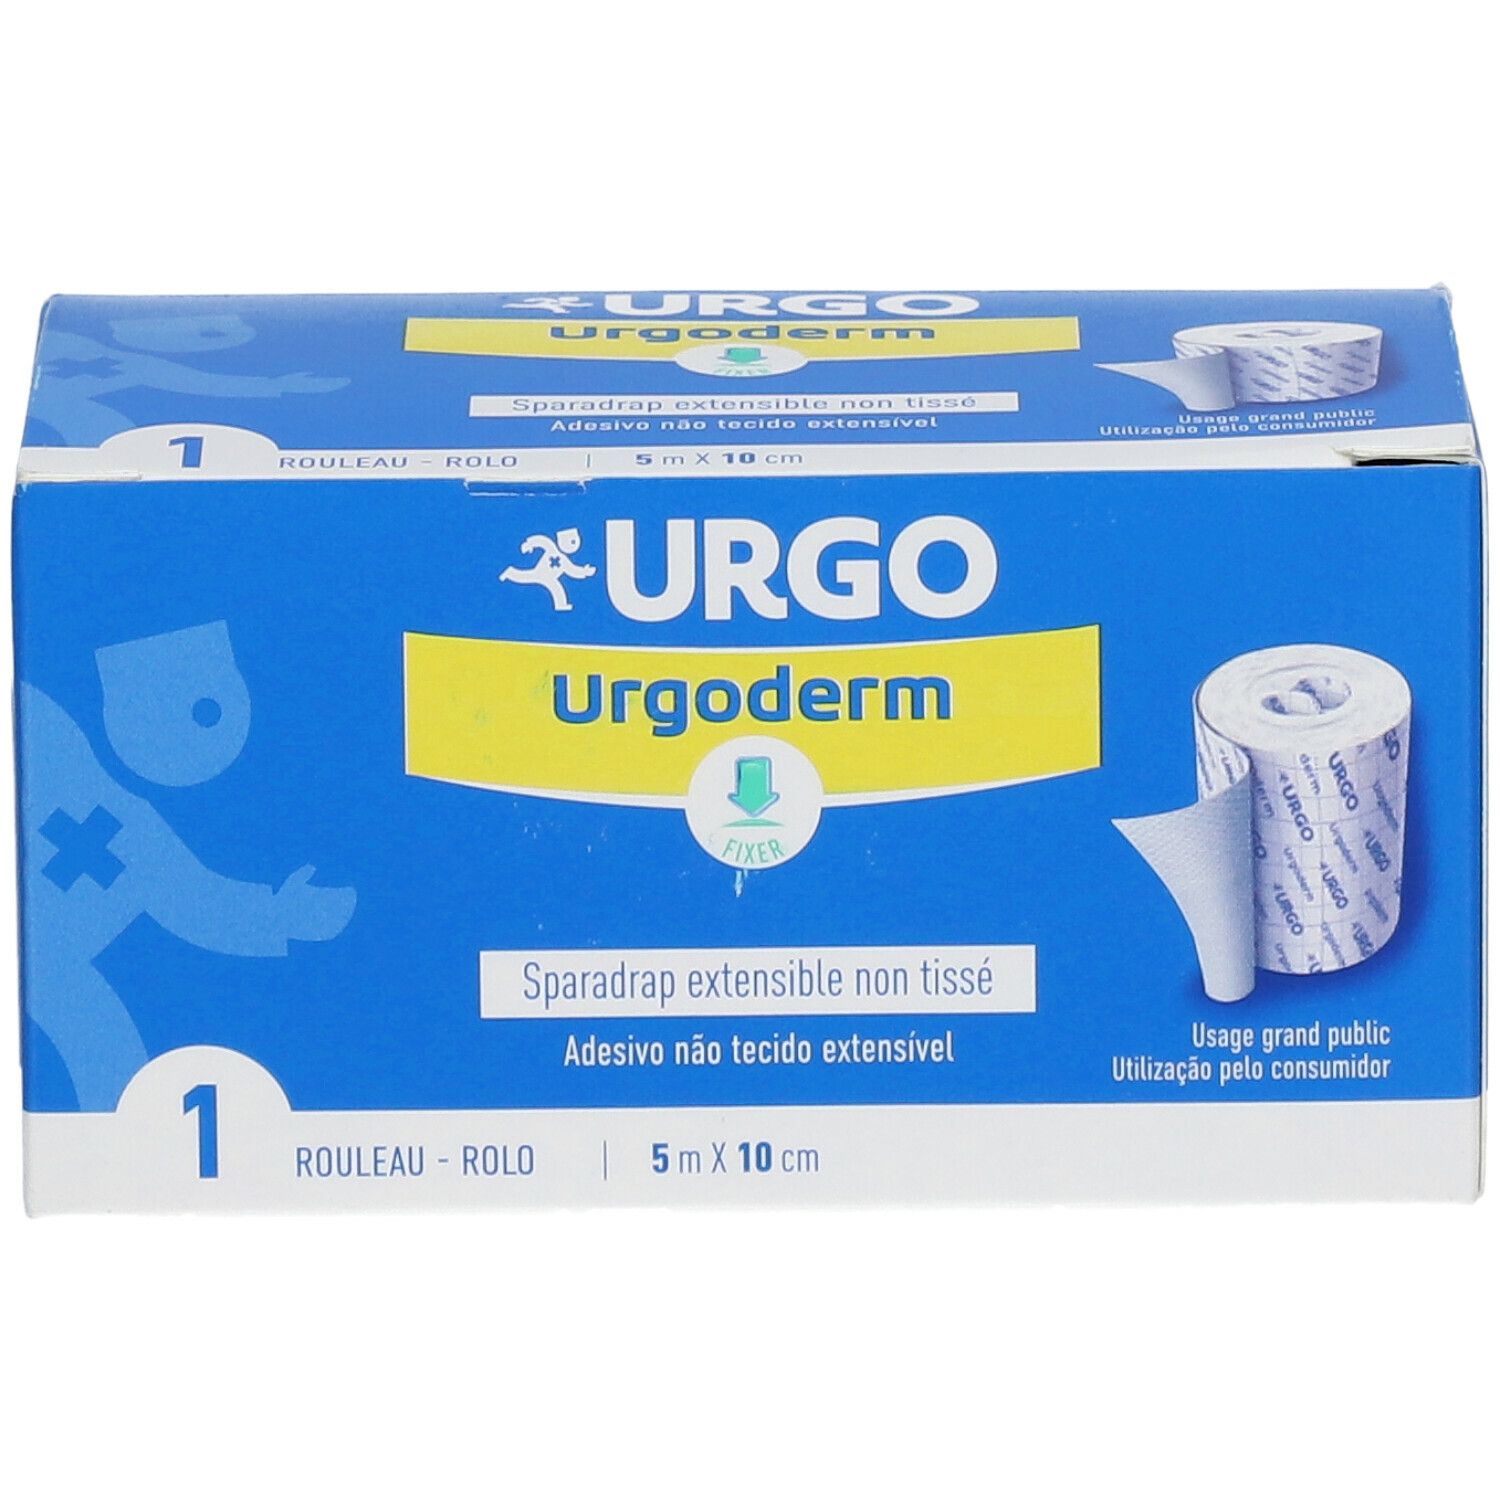 URGO Urgoderm Sparadrap non tissé extensible 5 m x 10 cm 1 pc(s) - Redcare  Pharmacie